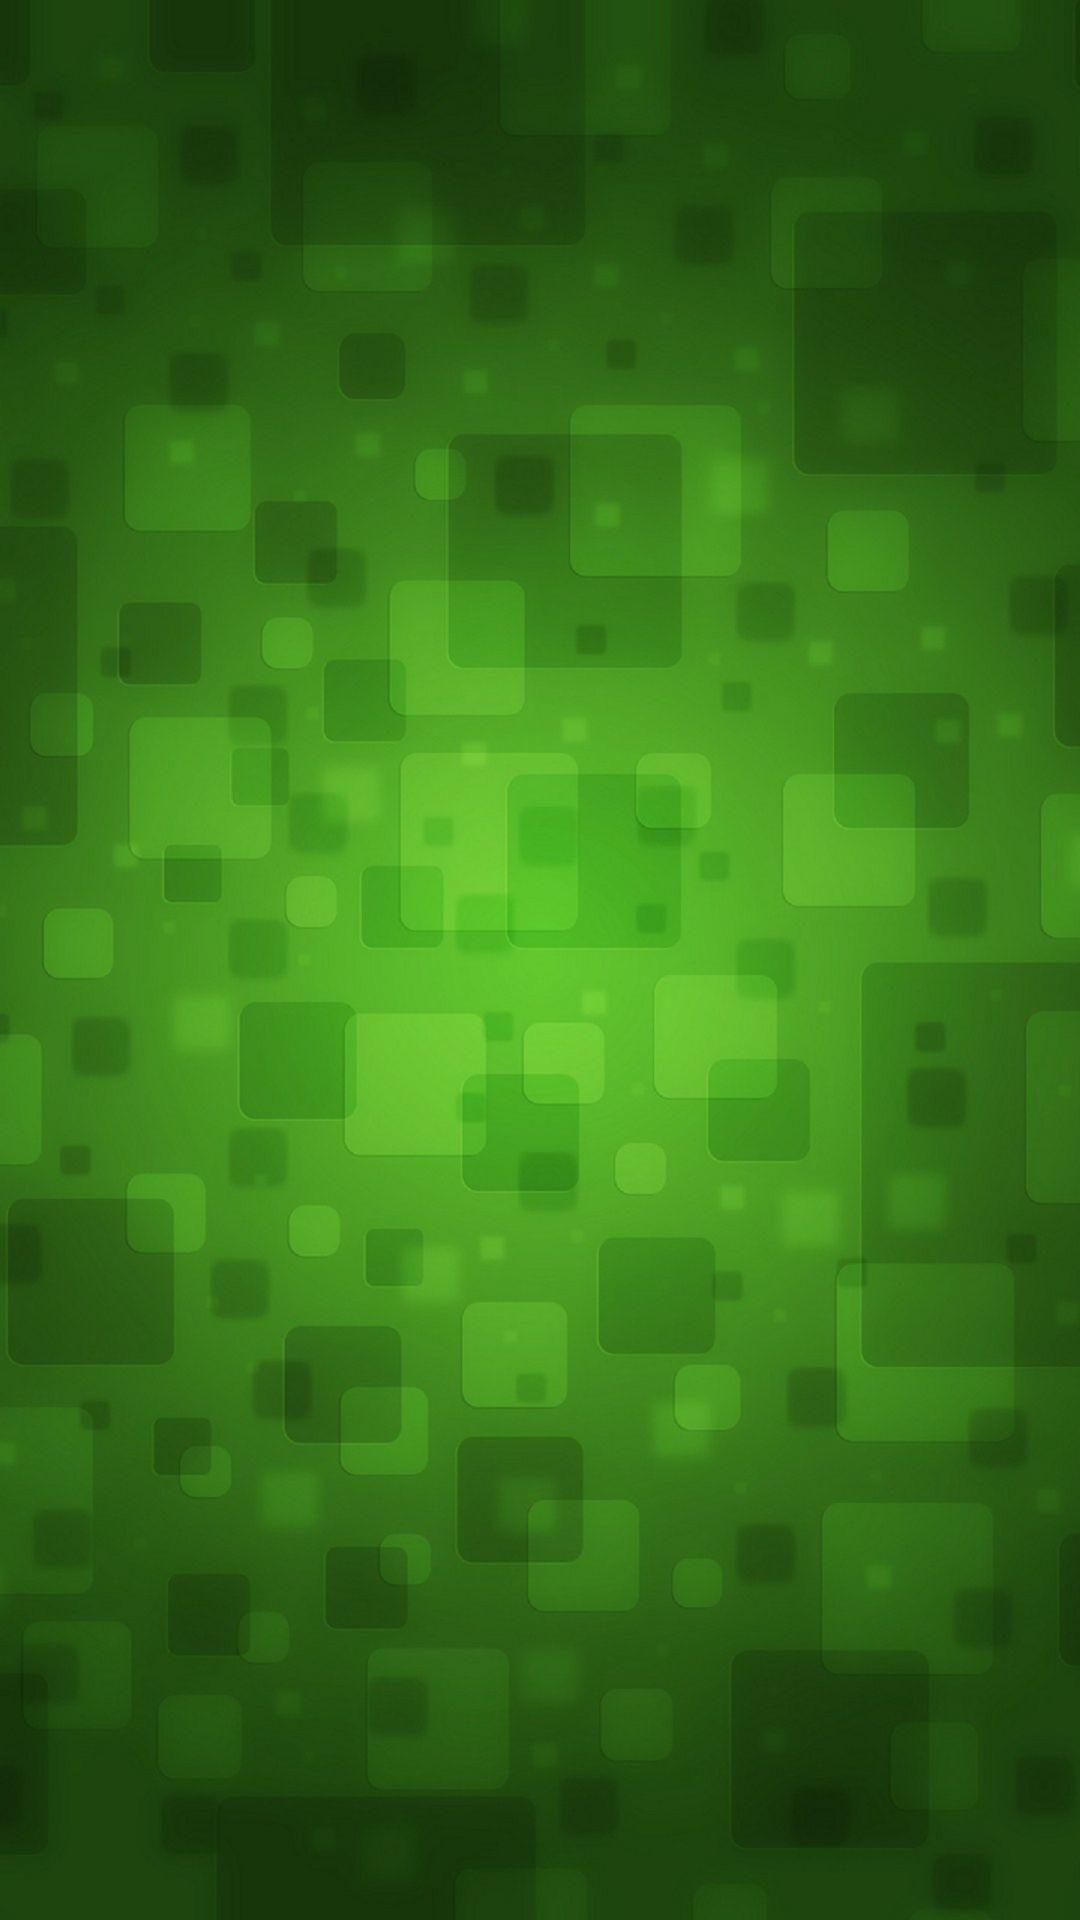 12+ Free Green Android Wallpaper - Bizt Wallpaper